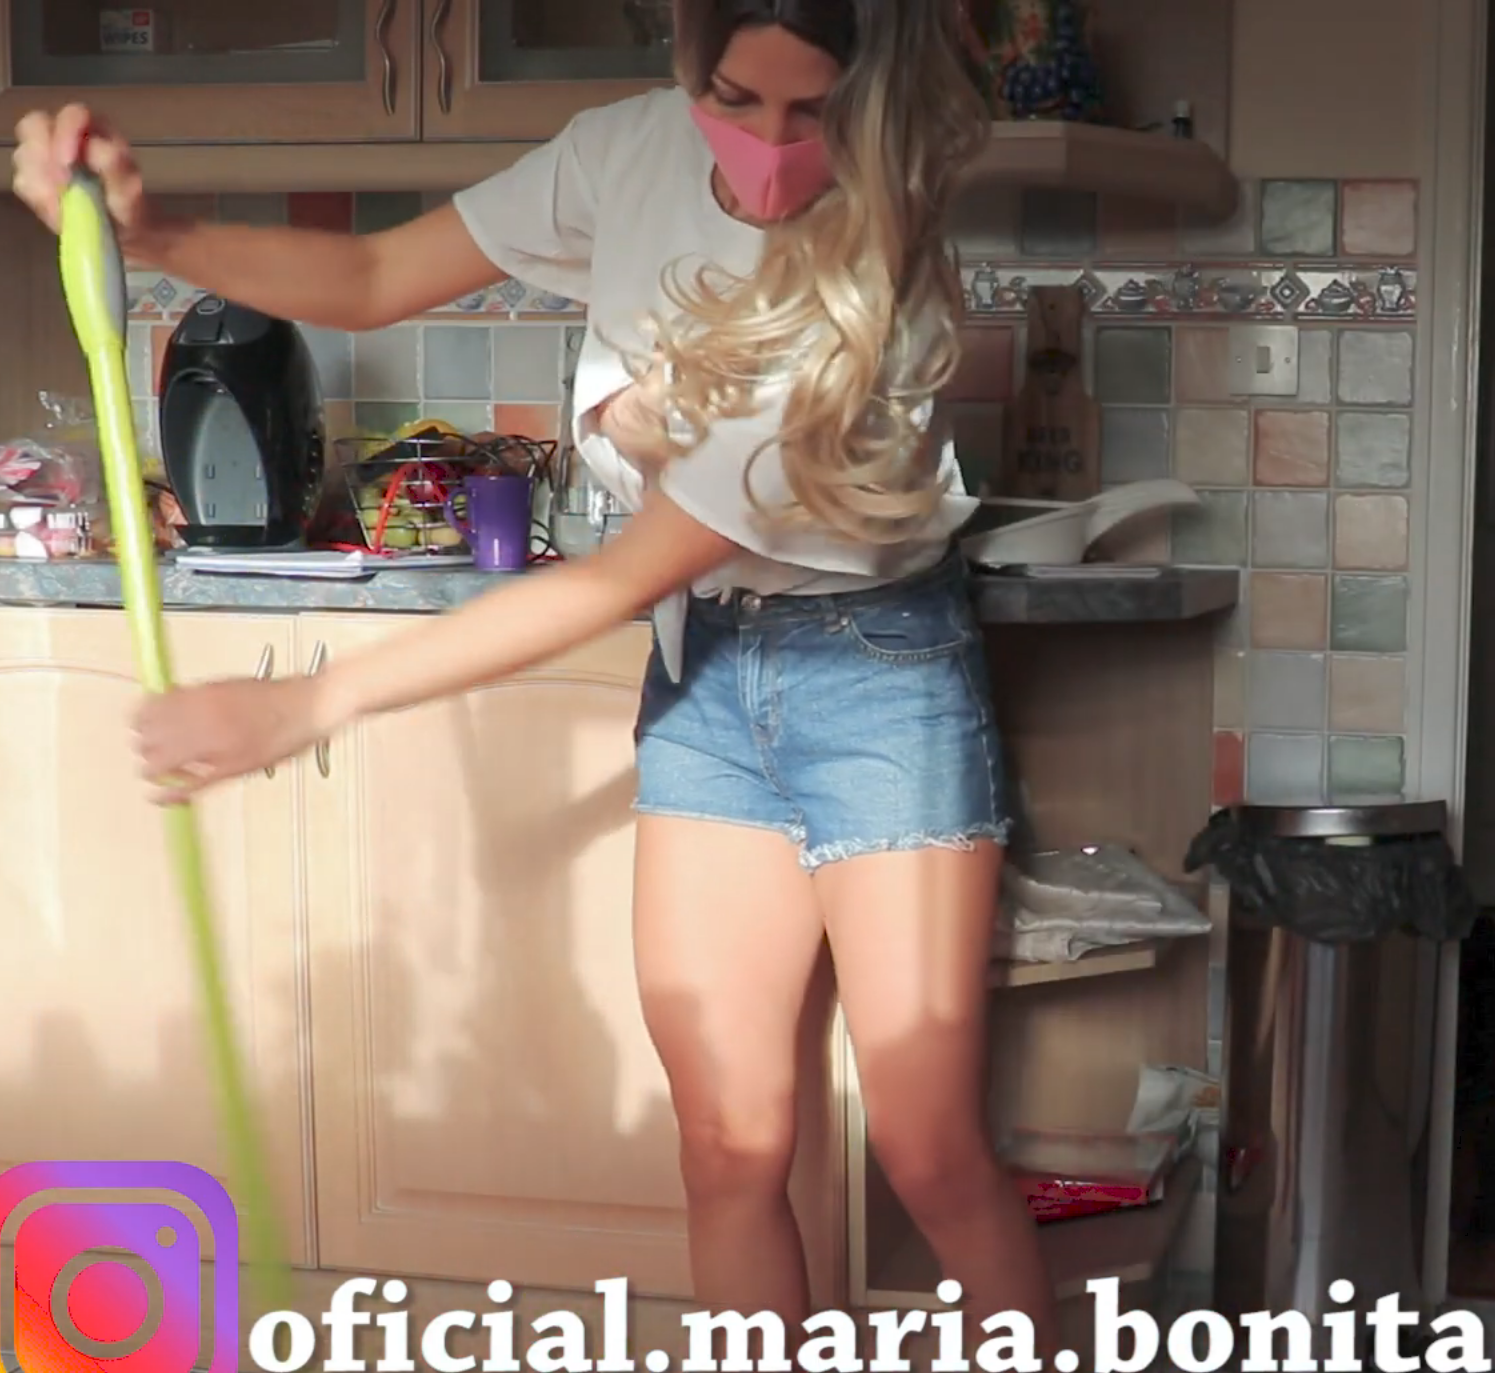 Maria bonita only fans